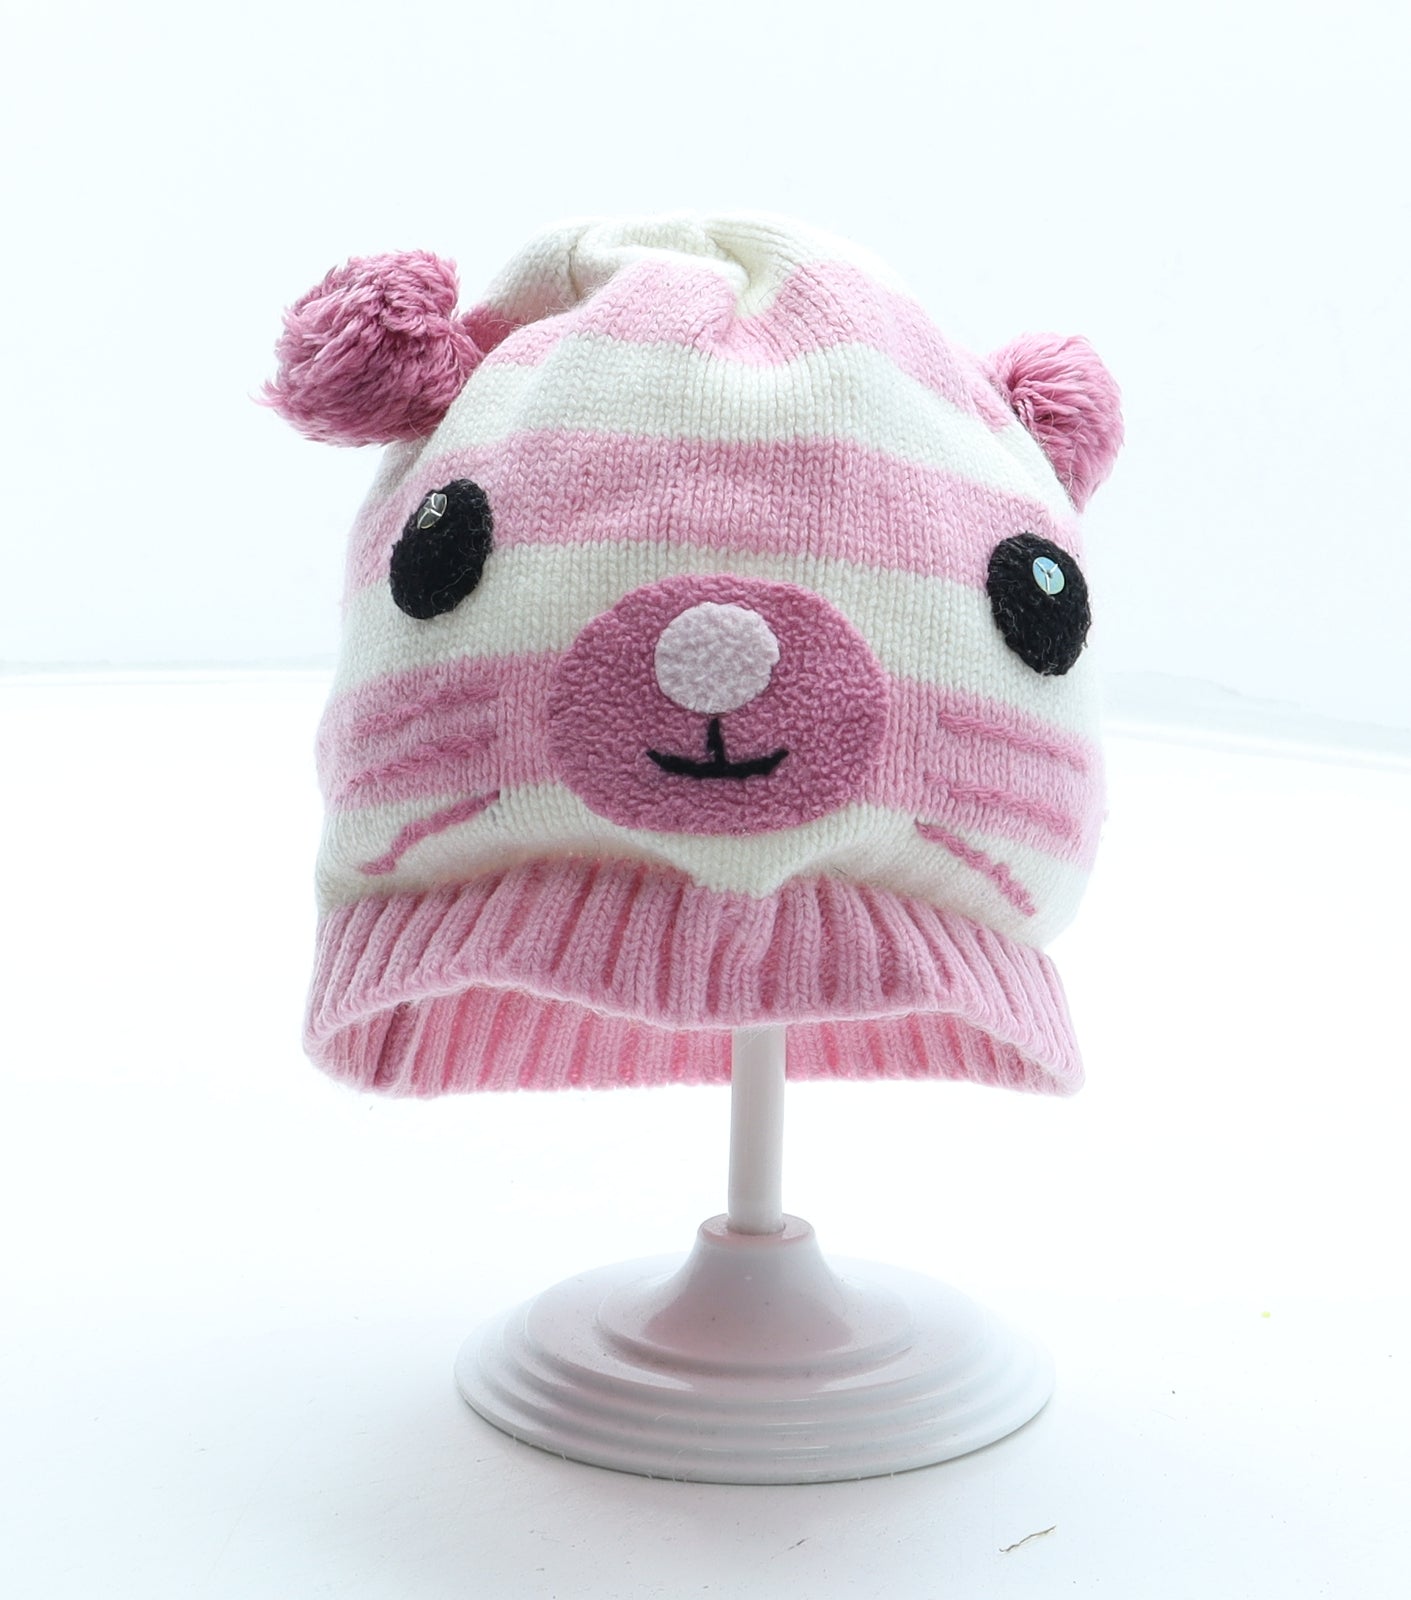 Preworn Girls Pink Striped Cotton Bobble Hat One Size - Cat